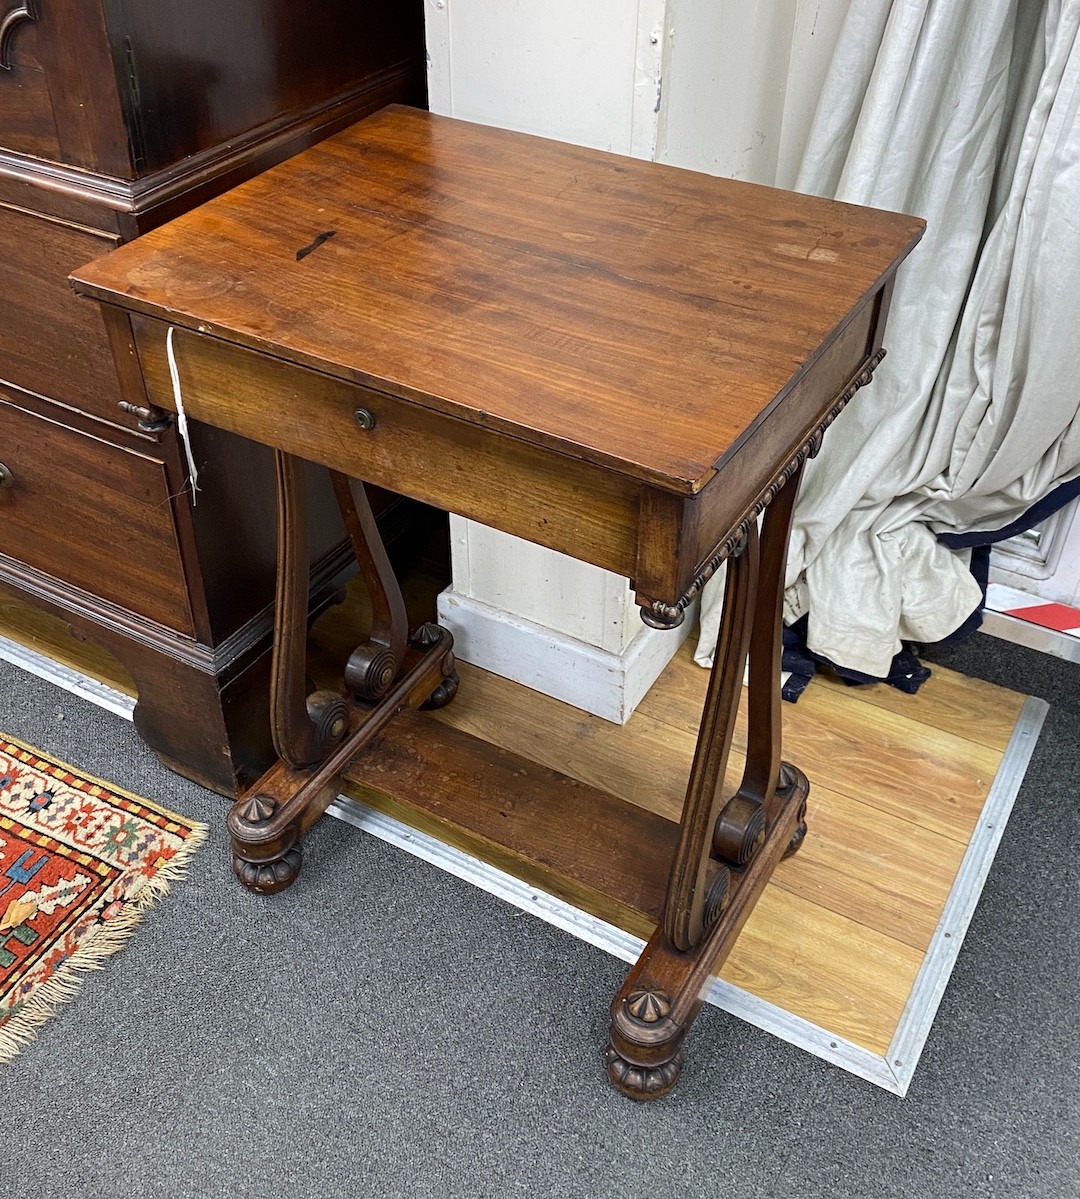 A Regency rectangular mahogany work table, width 50cm, depth 40cm, height 72cm